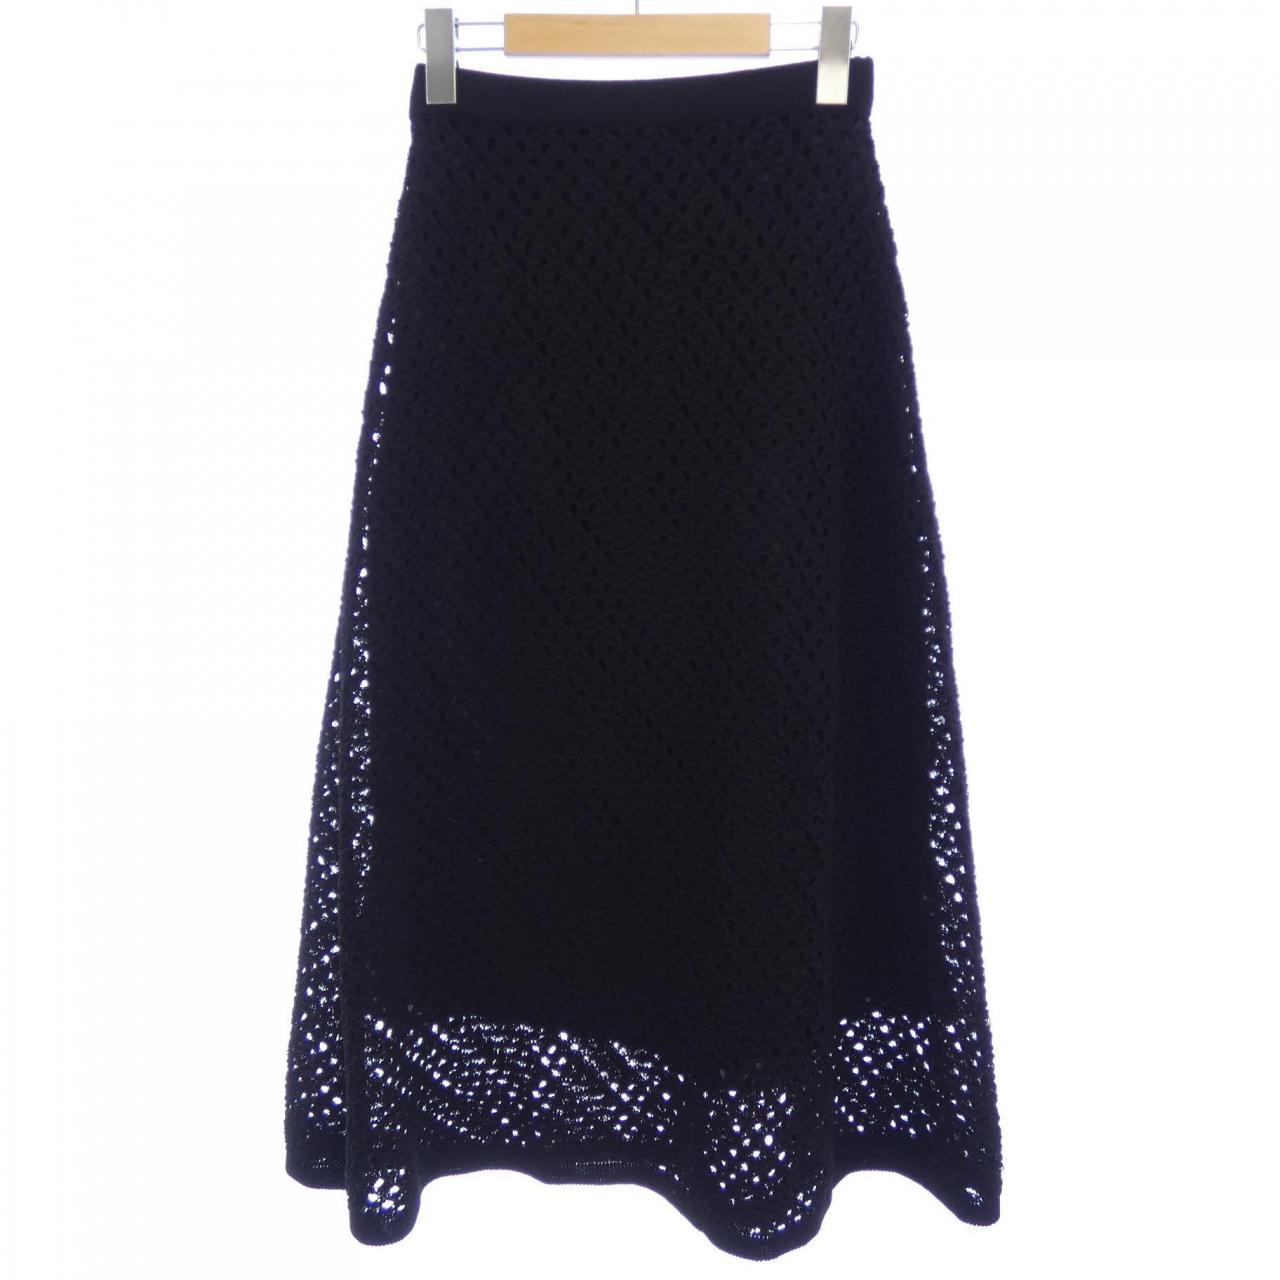 Drawer スカート平置きの裾幅79cm